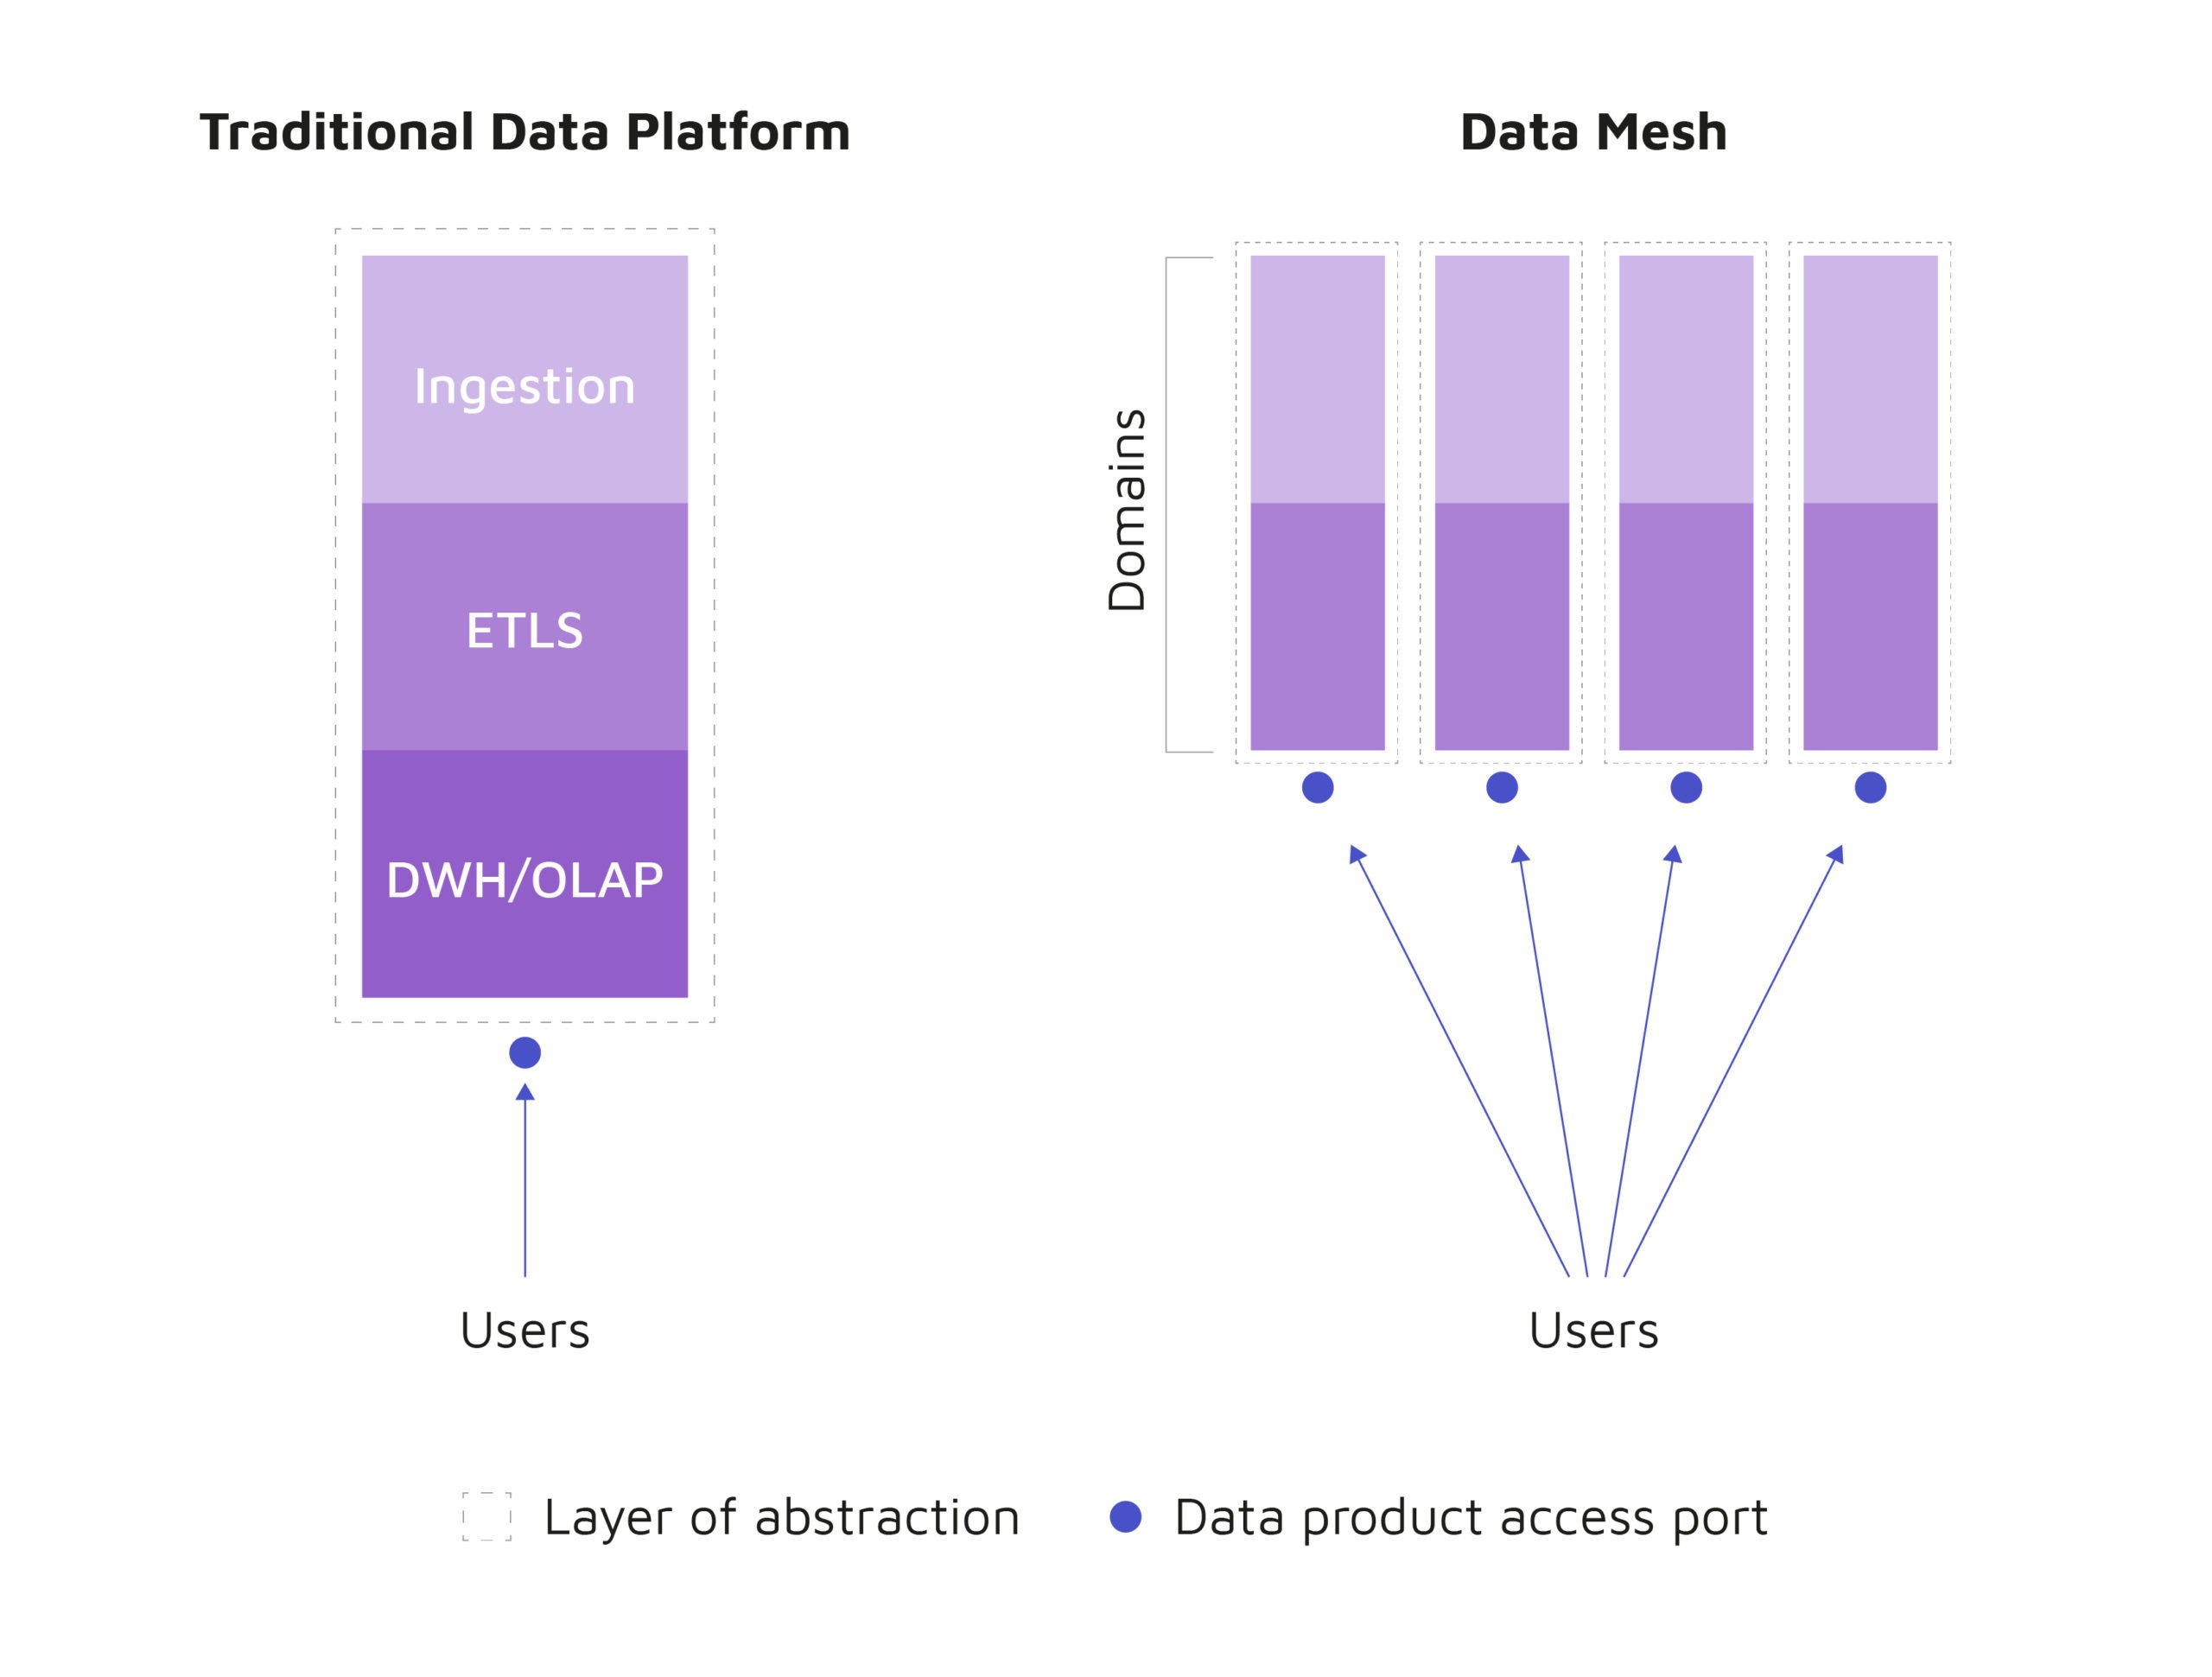 comparing data mesh to traditional data platform